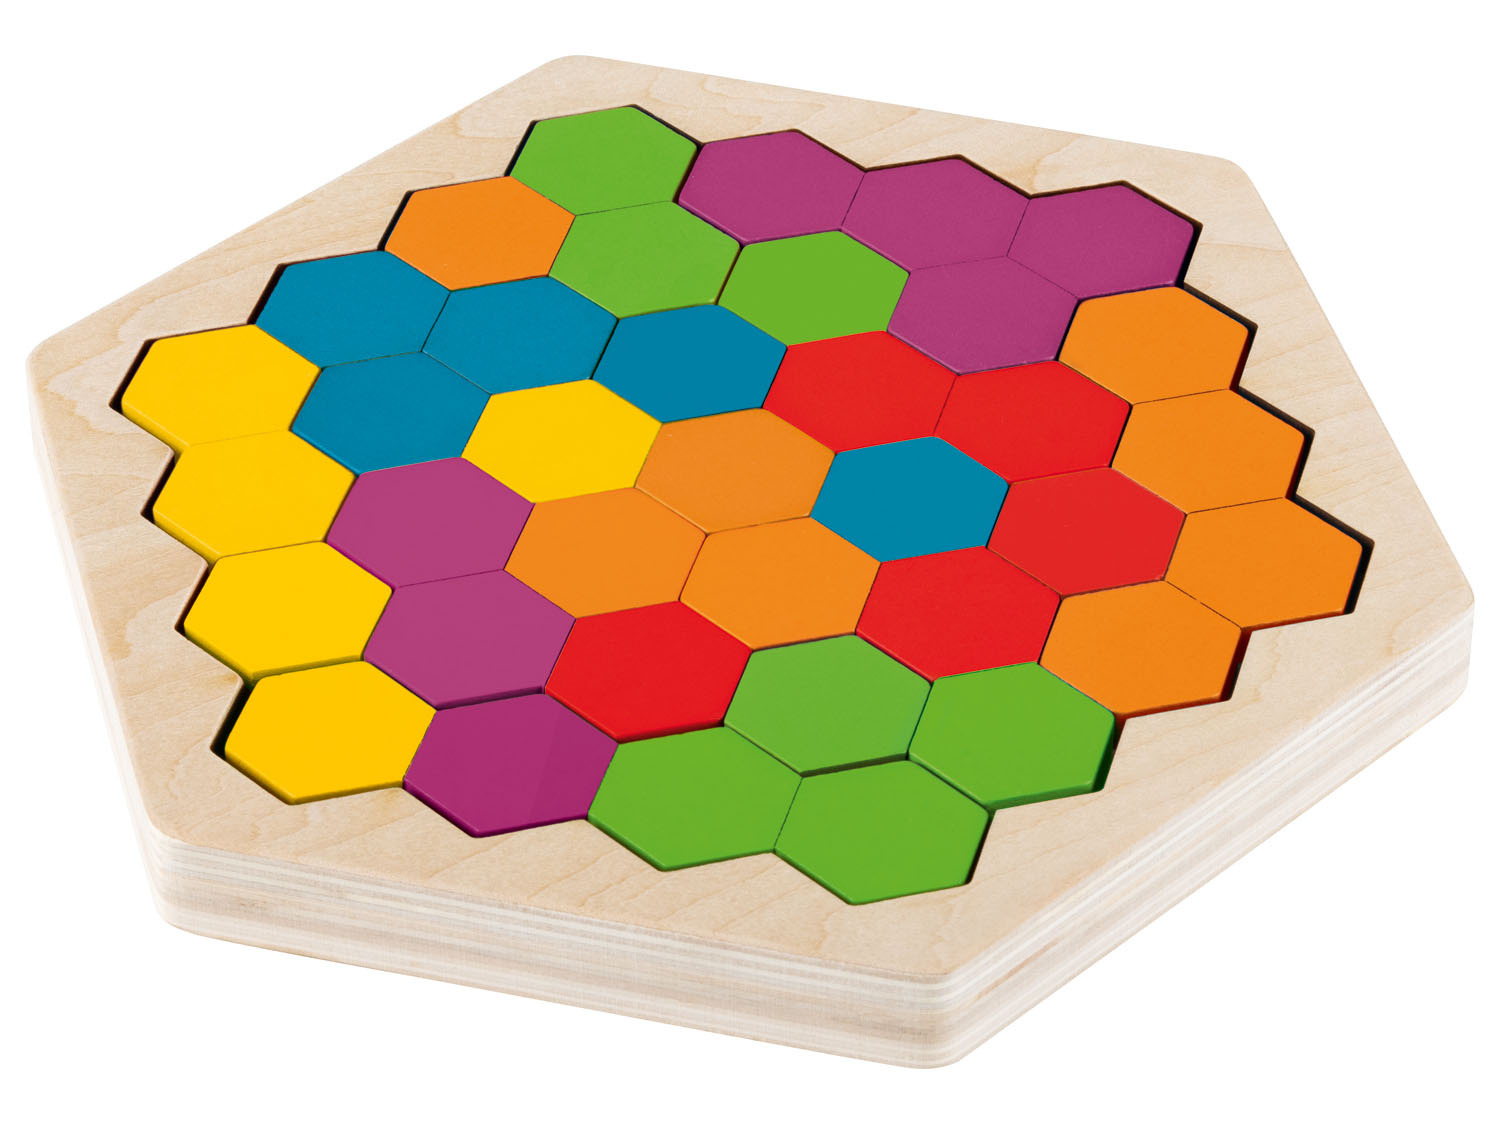 Kreis Playtive / / Tangram Mesjeuxipad | Blume ZR8919 / Verkauf Spitze Legespiel Hexagon Regenbogen